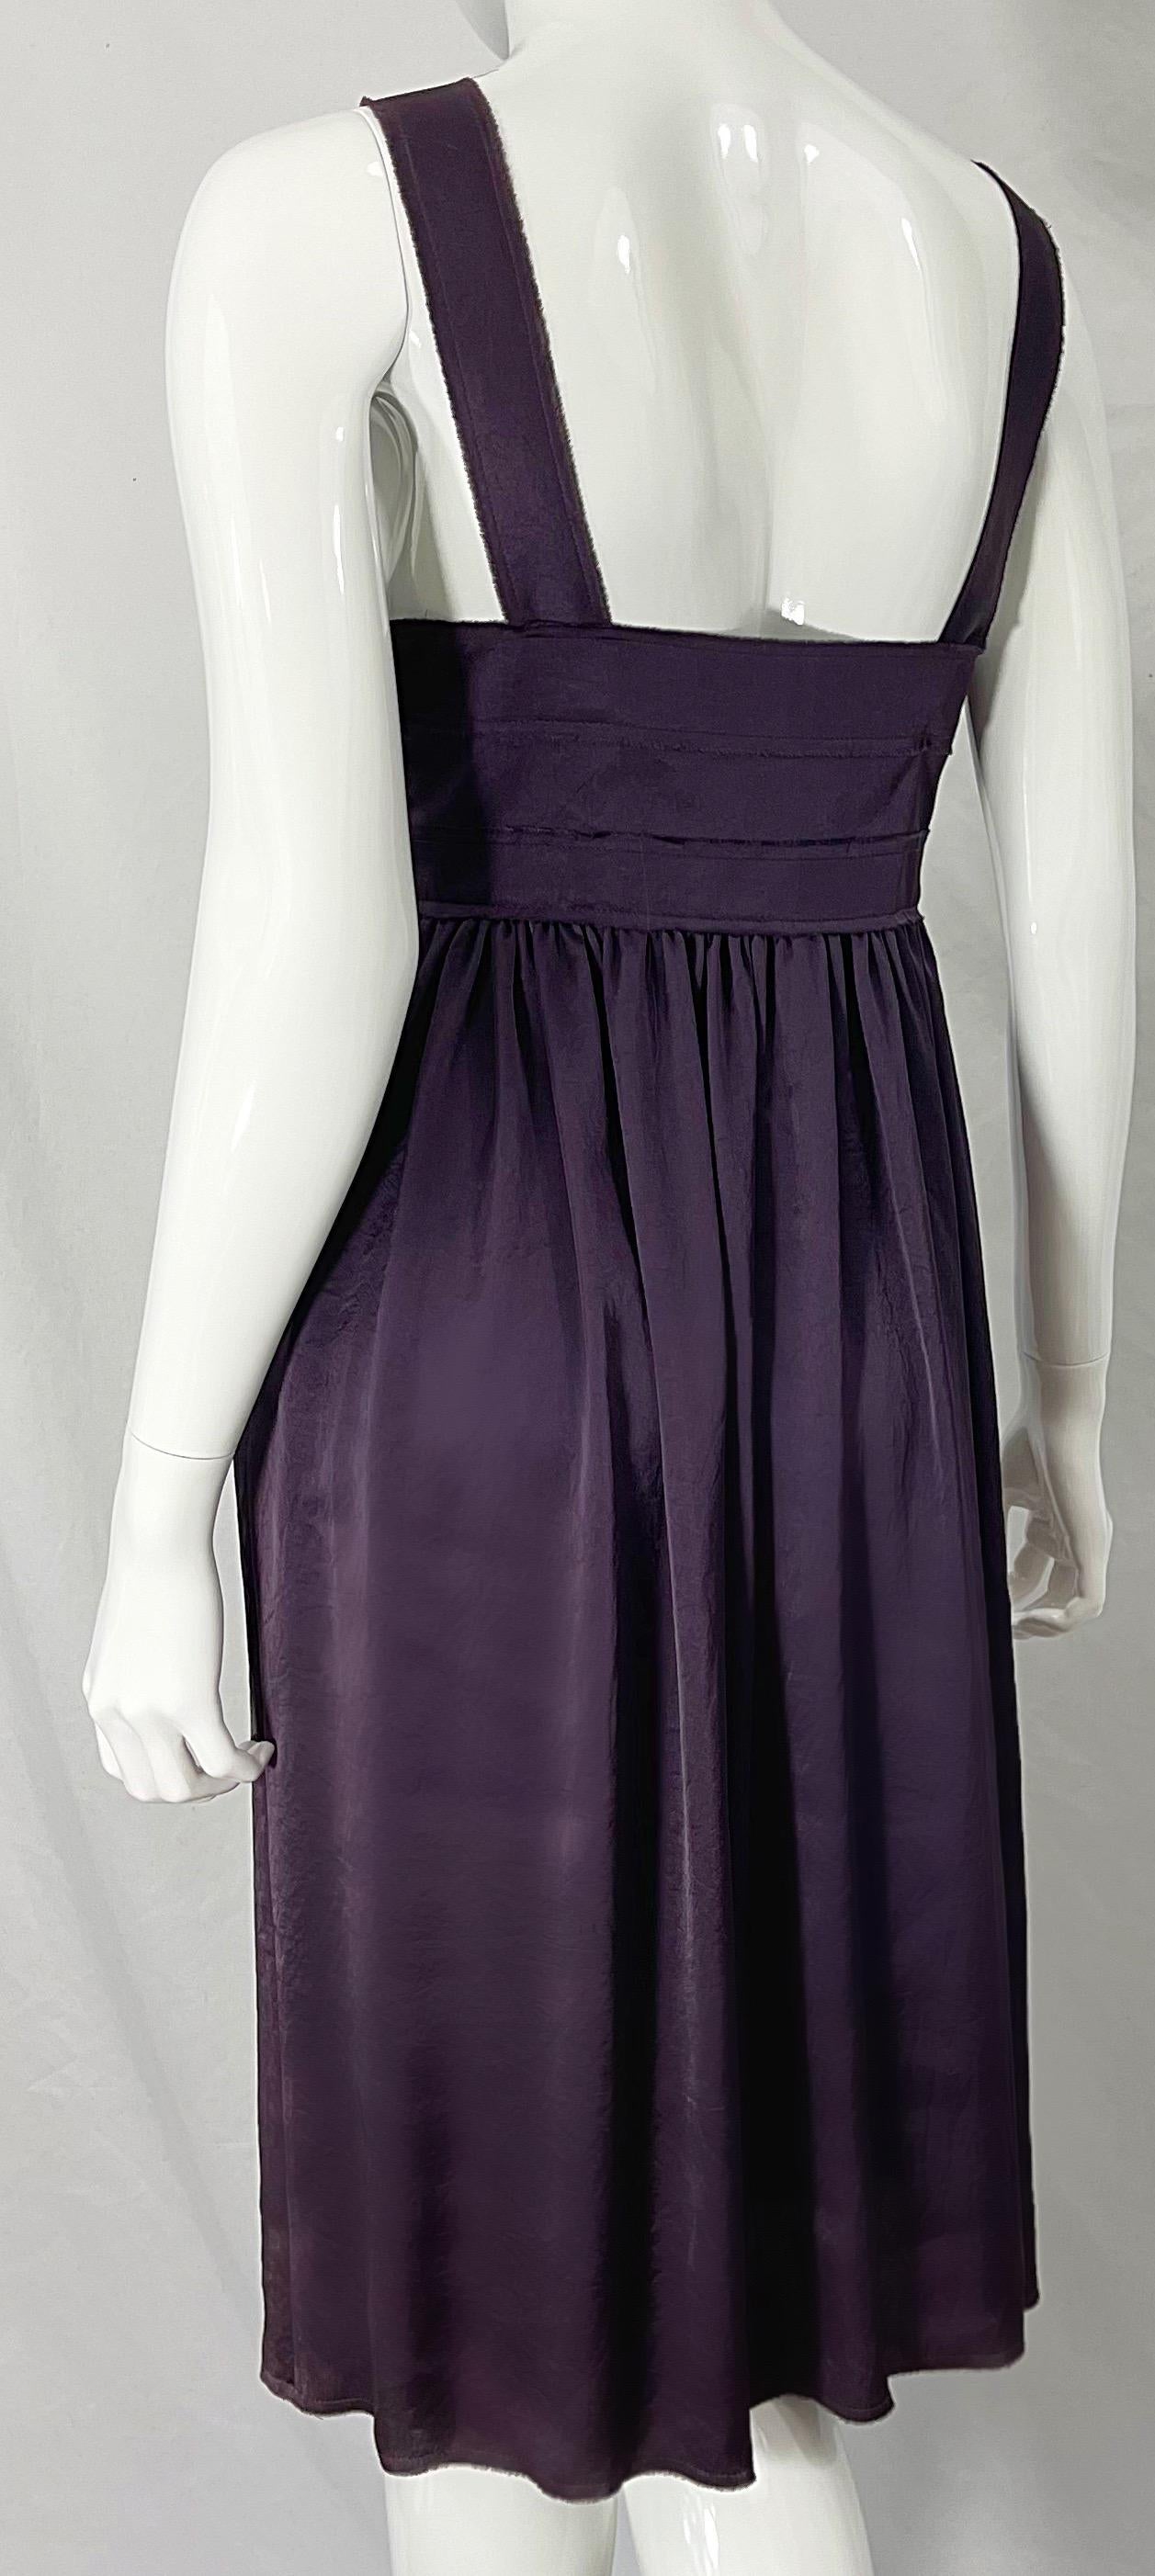 Lanvin S/S 2007 Alber Elbaz Sz 38 Purple Rhinestone Encrusted Empire Waist Dress For Sale 1